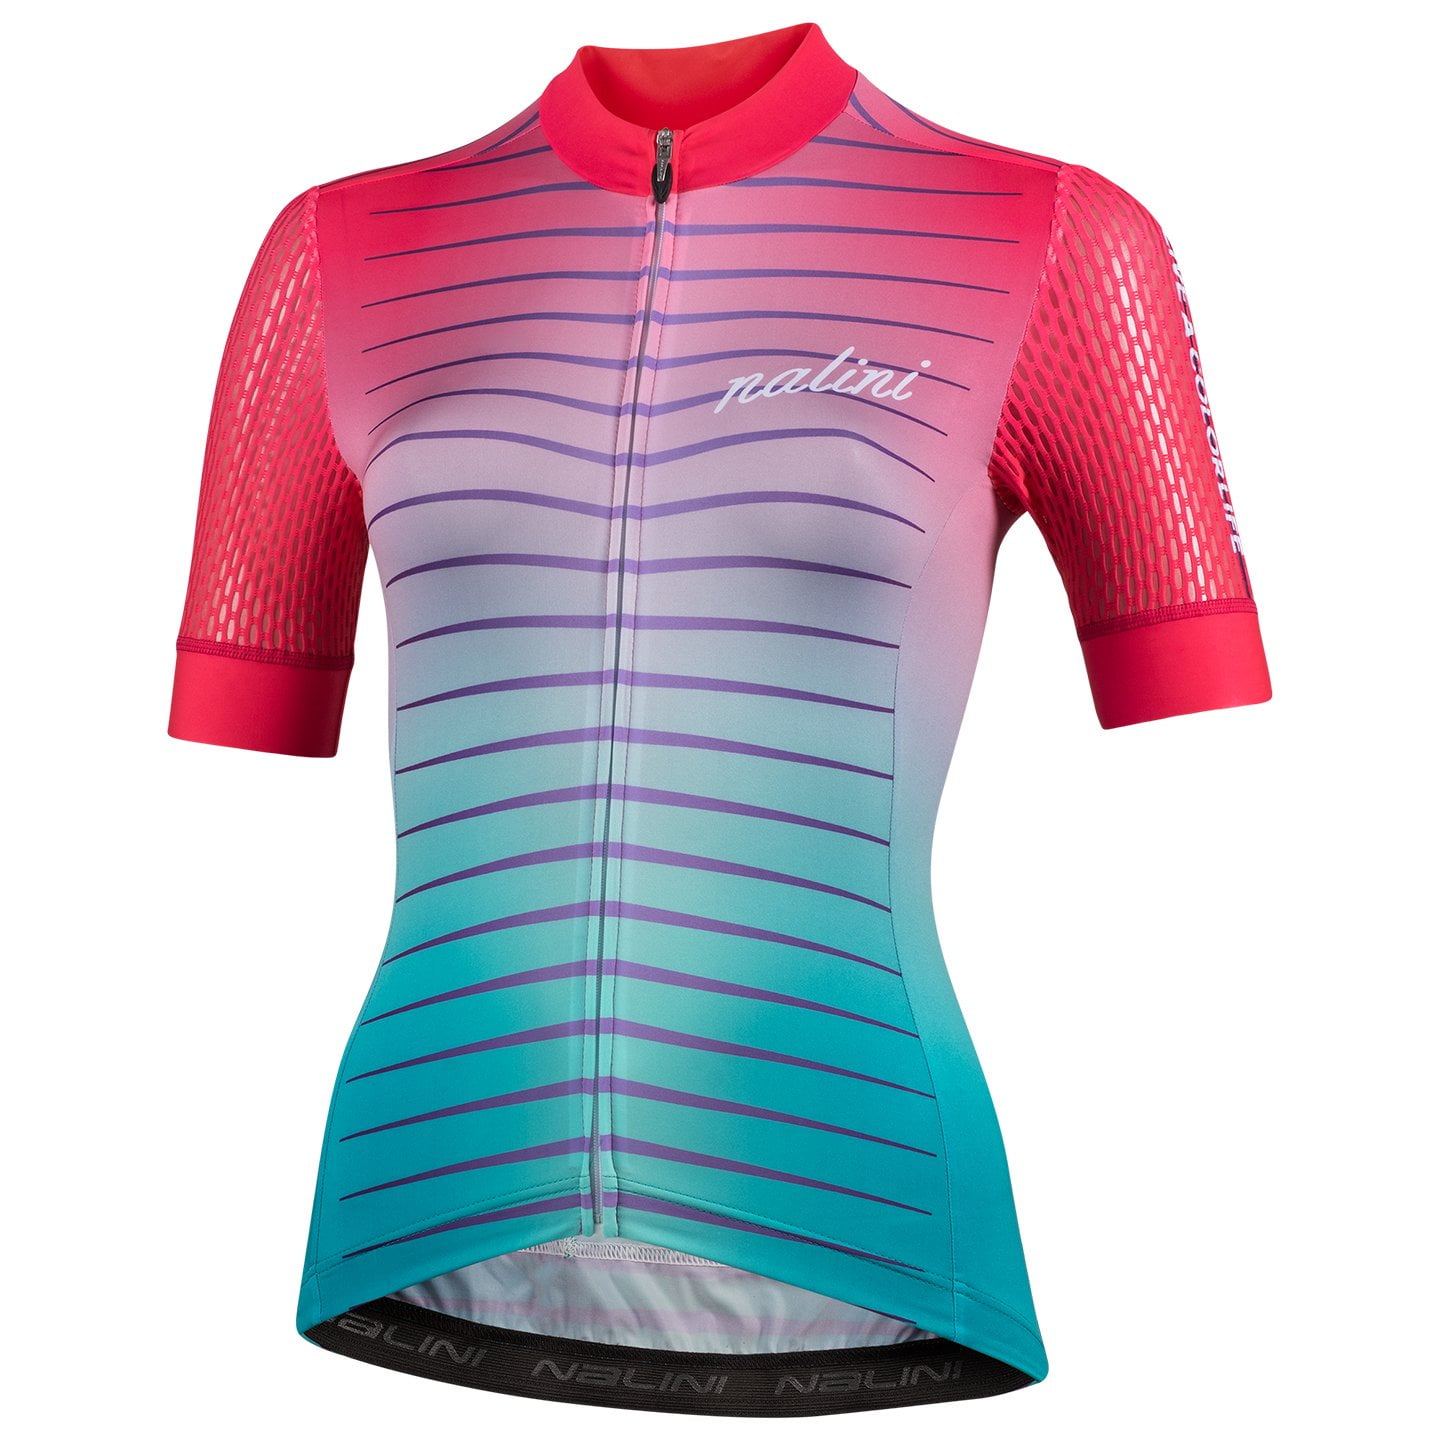 NALINI Las Vegas Women’s Jersey Women’s Short Sleeve Jersey, size M, Cycling jersey, Cycle clothing